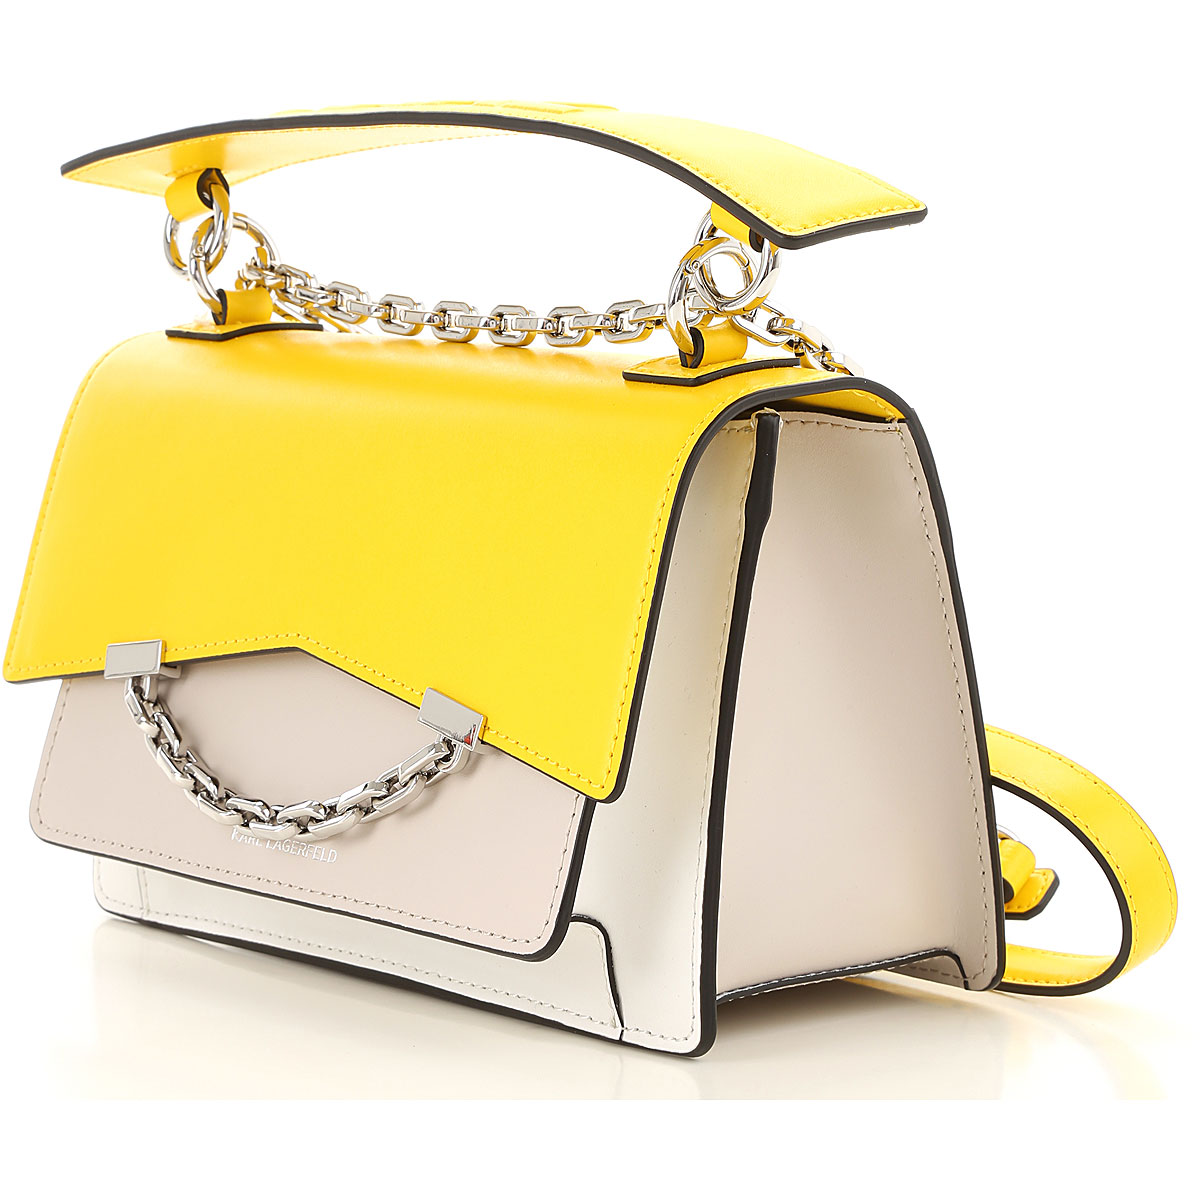 Handbags Karl Lagerfeld, Style code: 216w3049-a620-  Karl lagerfeld  handbags, Karl lagerfeld, Clutch bag